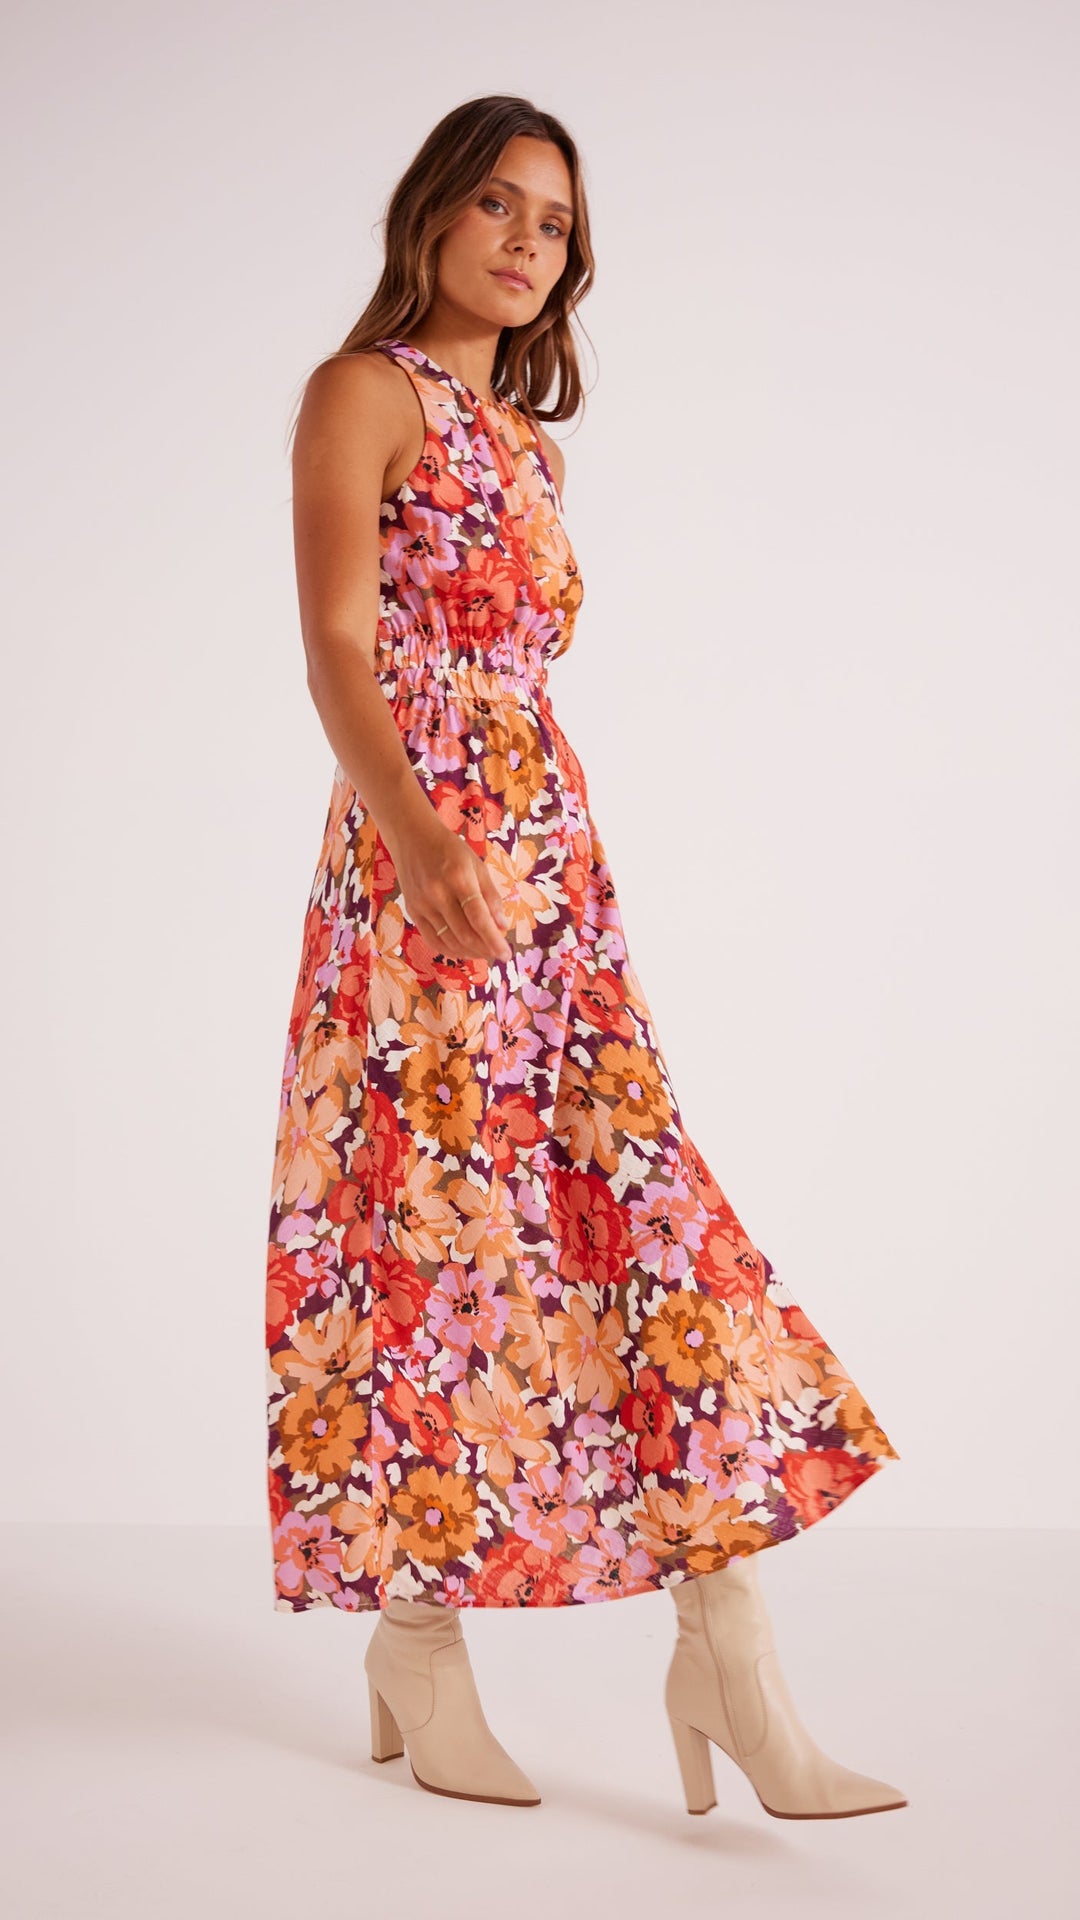 zanita cut-out midi dress by minkpink in floral print. Sleeveless. Fall23. JOlie folie boutique.